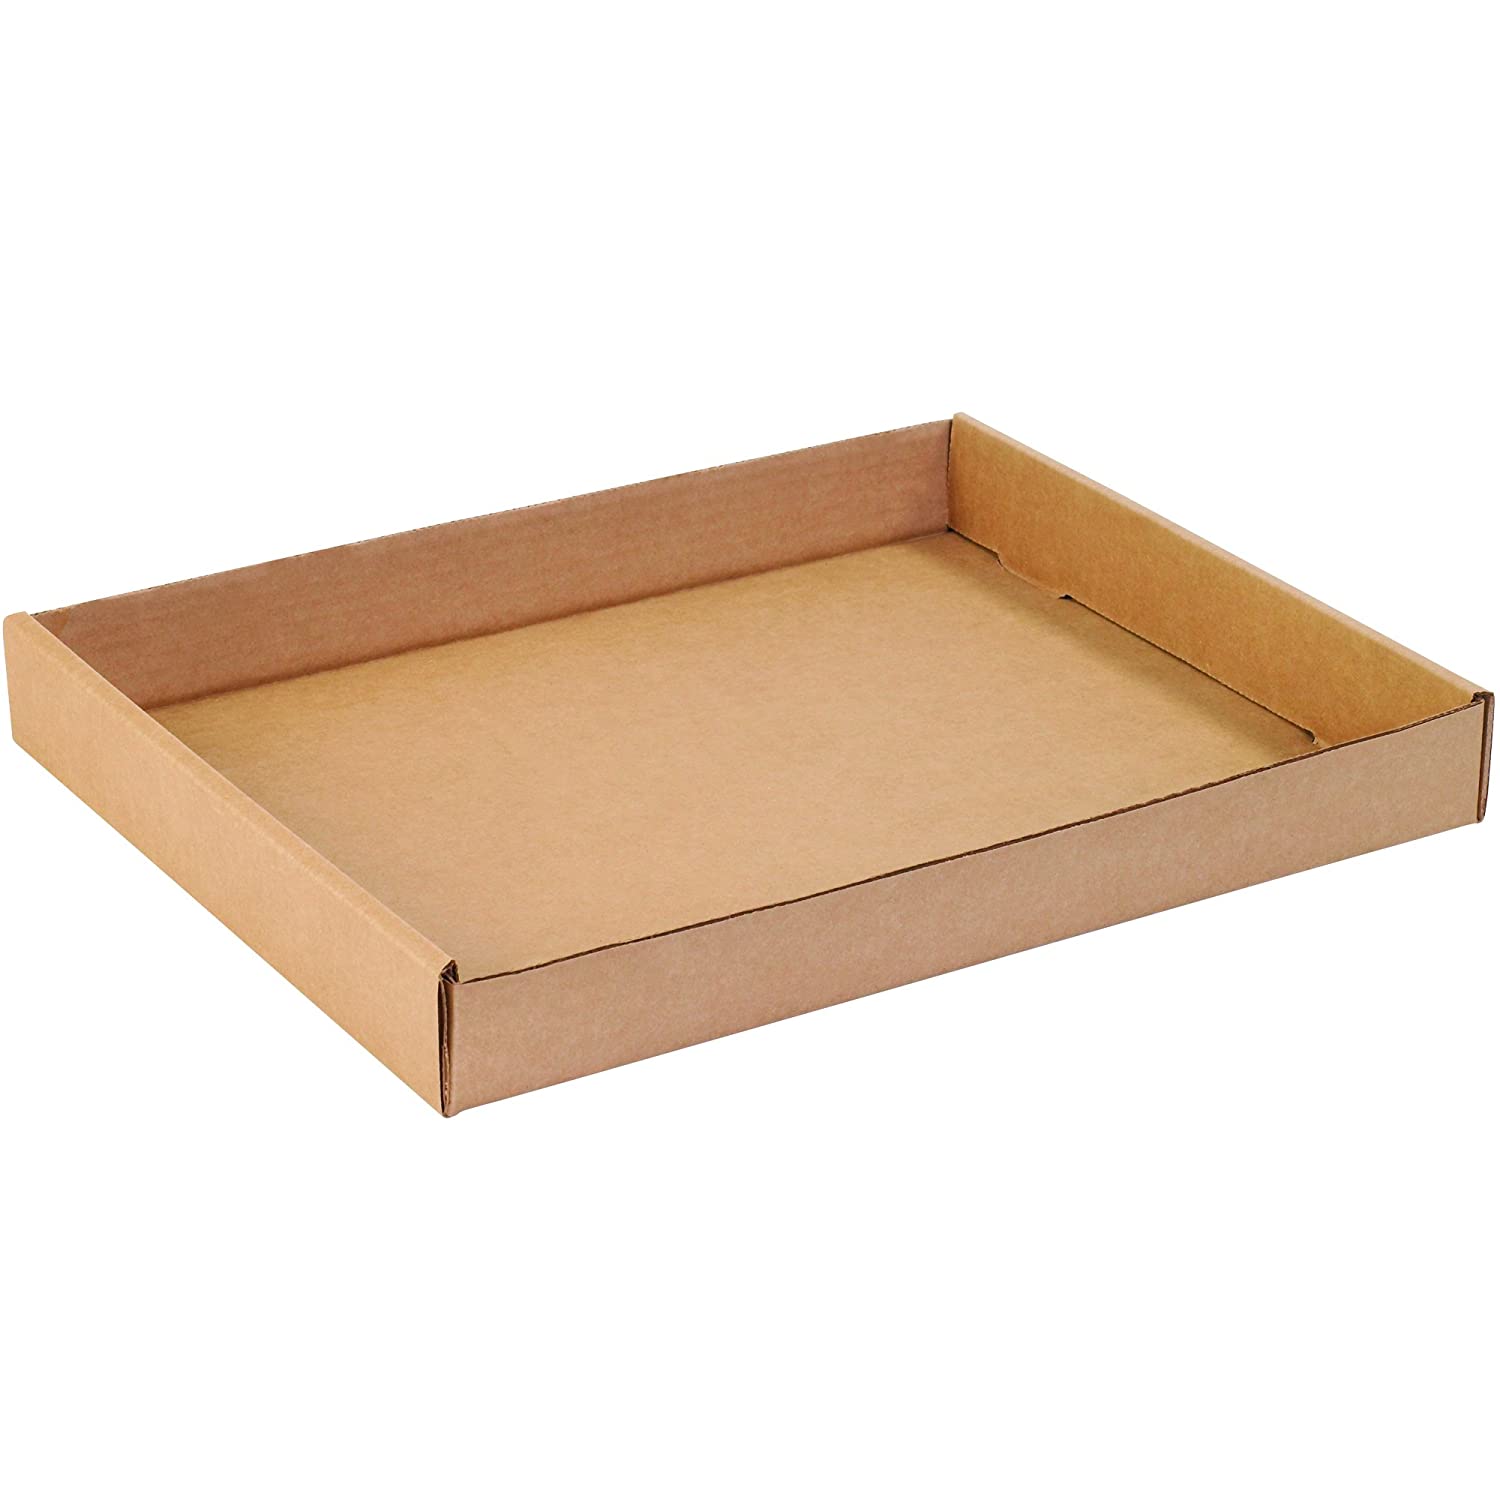 Box, 36.5x22.5x12&quot;, FSLS-Top
&amp; Bottom Tray